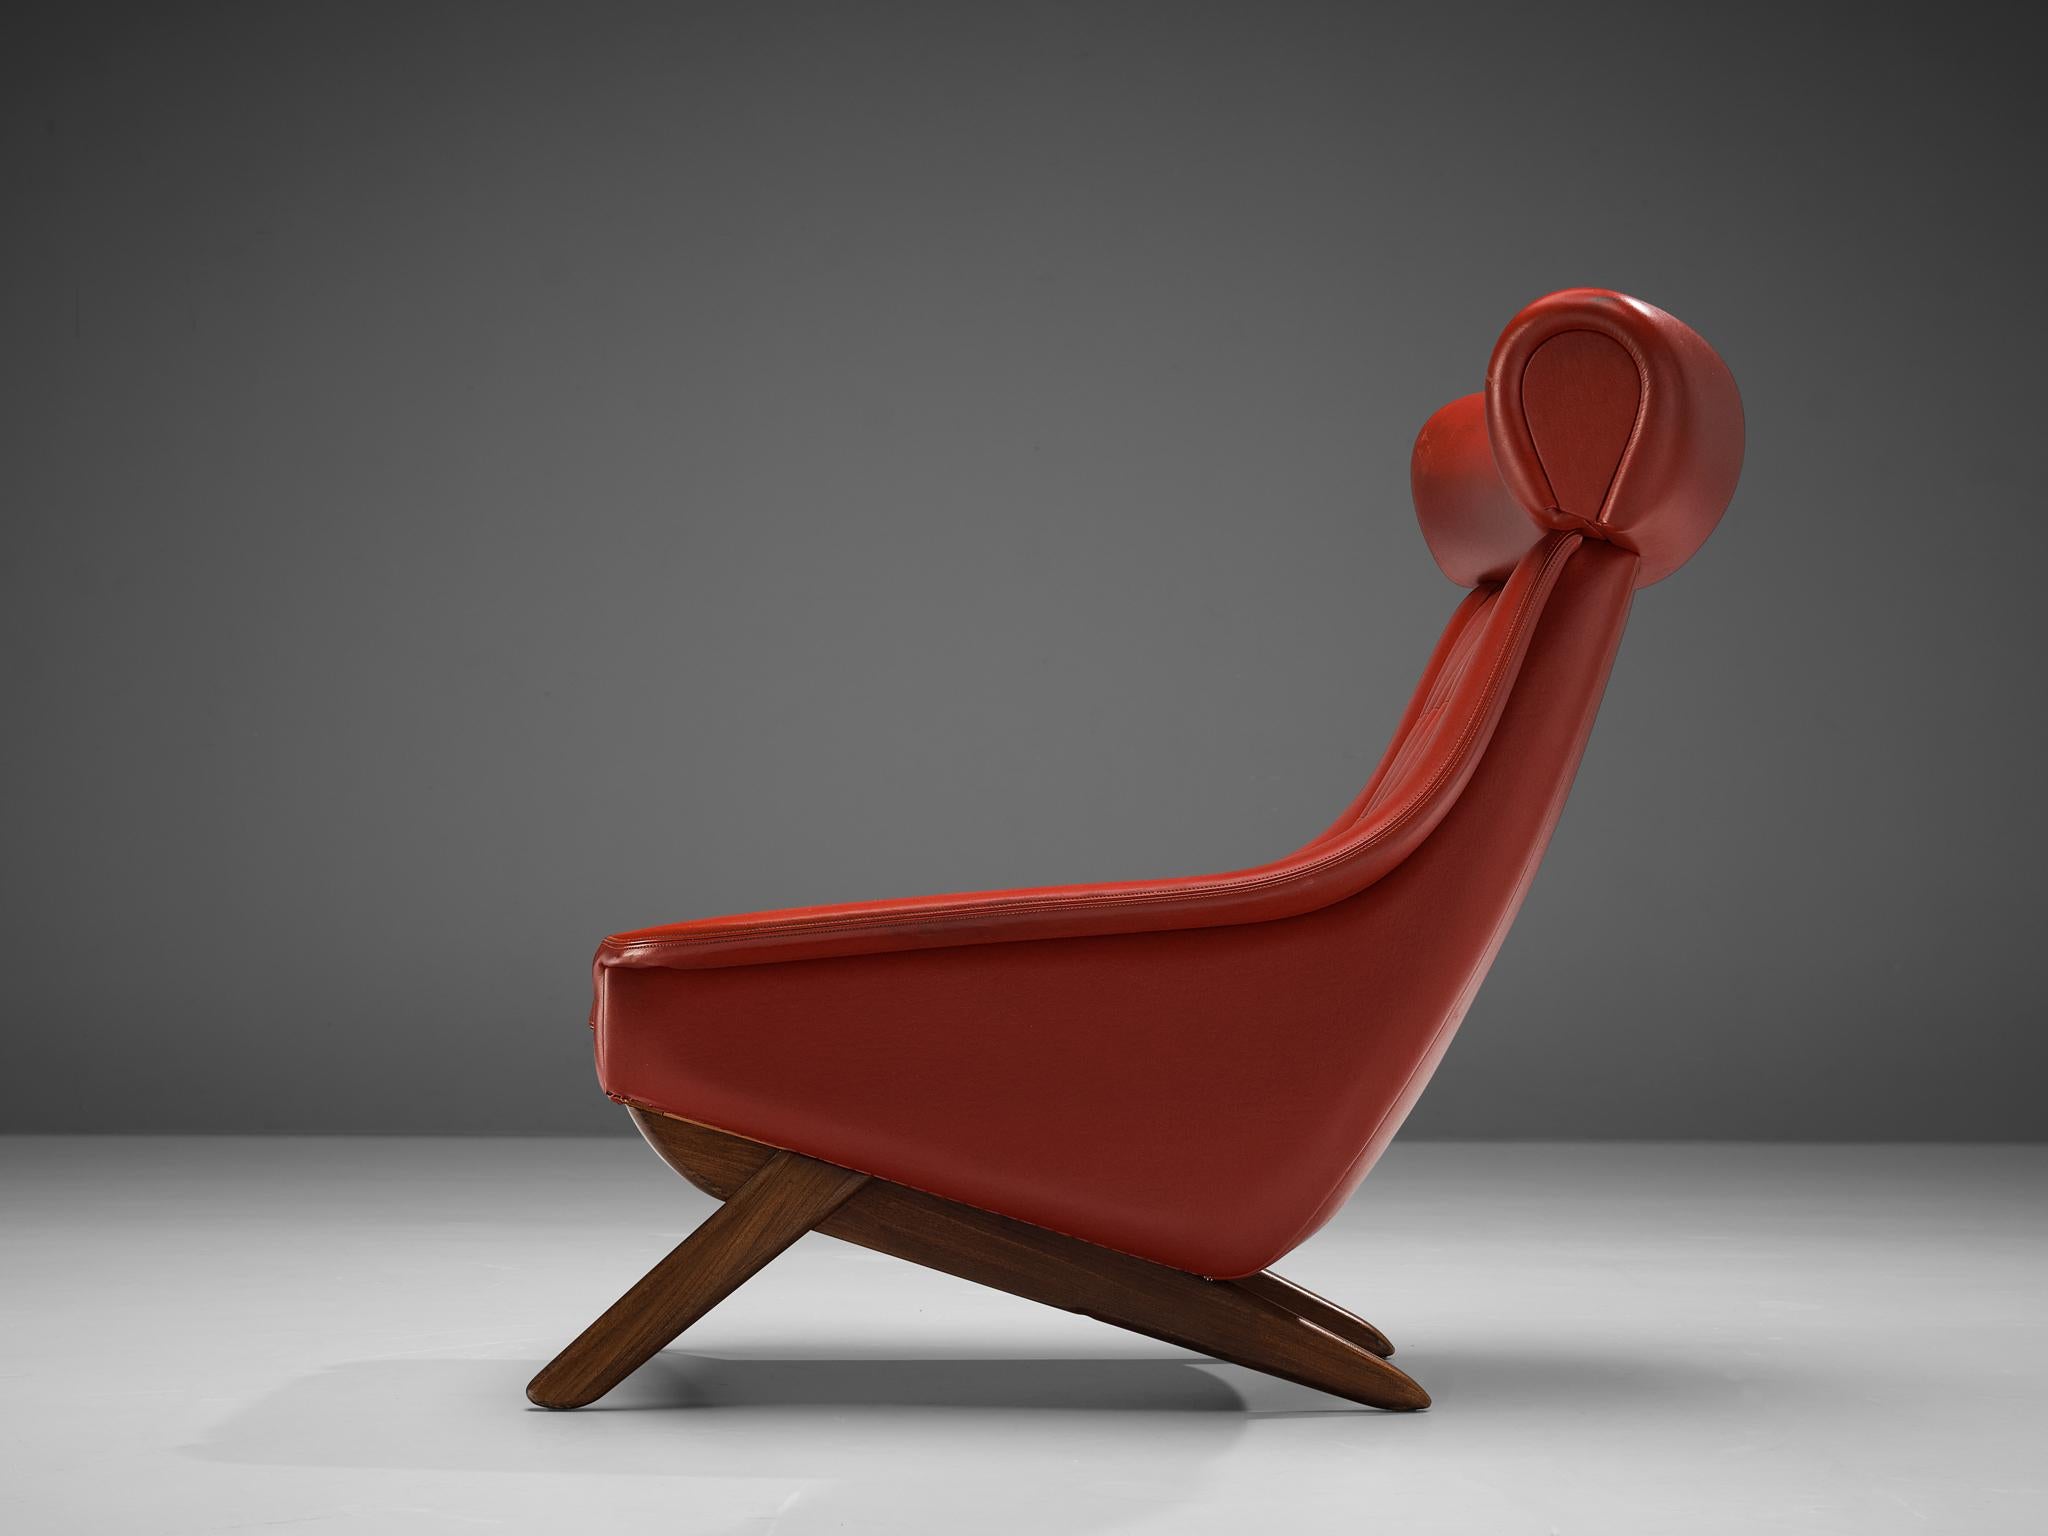 Illum Wikkelsø, Sessel 'Ox', Leder, ETTE Mahagoni, Dänemark 1960er Jahre.

Formschöner Sessel mit rotem Kunstlederbezug des dänischen Designers Illum Wikkelsø. Dieser 